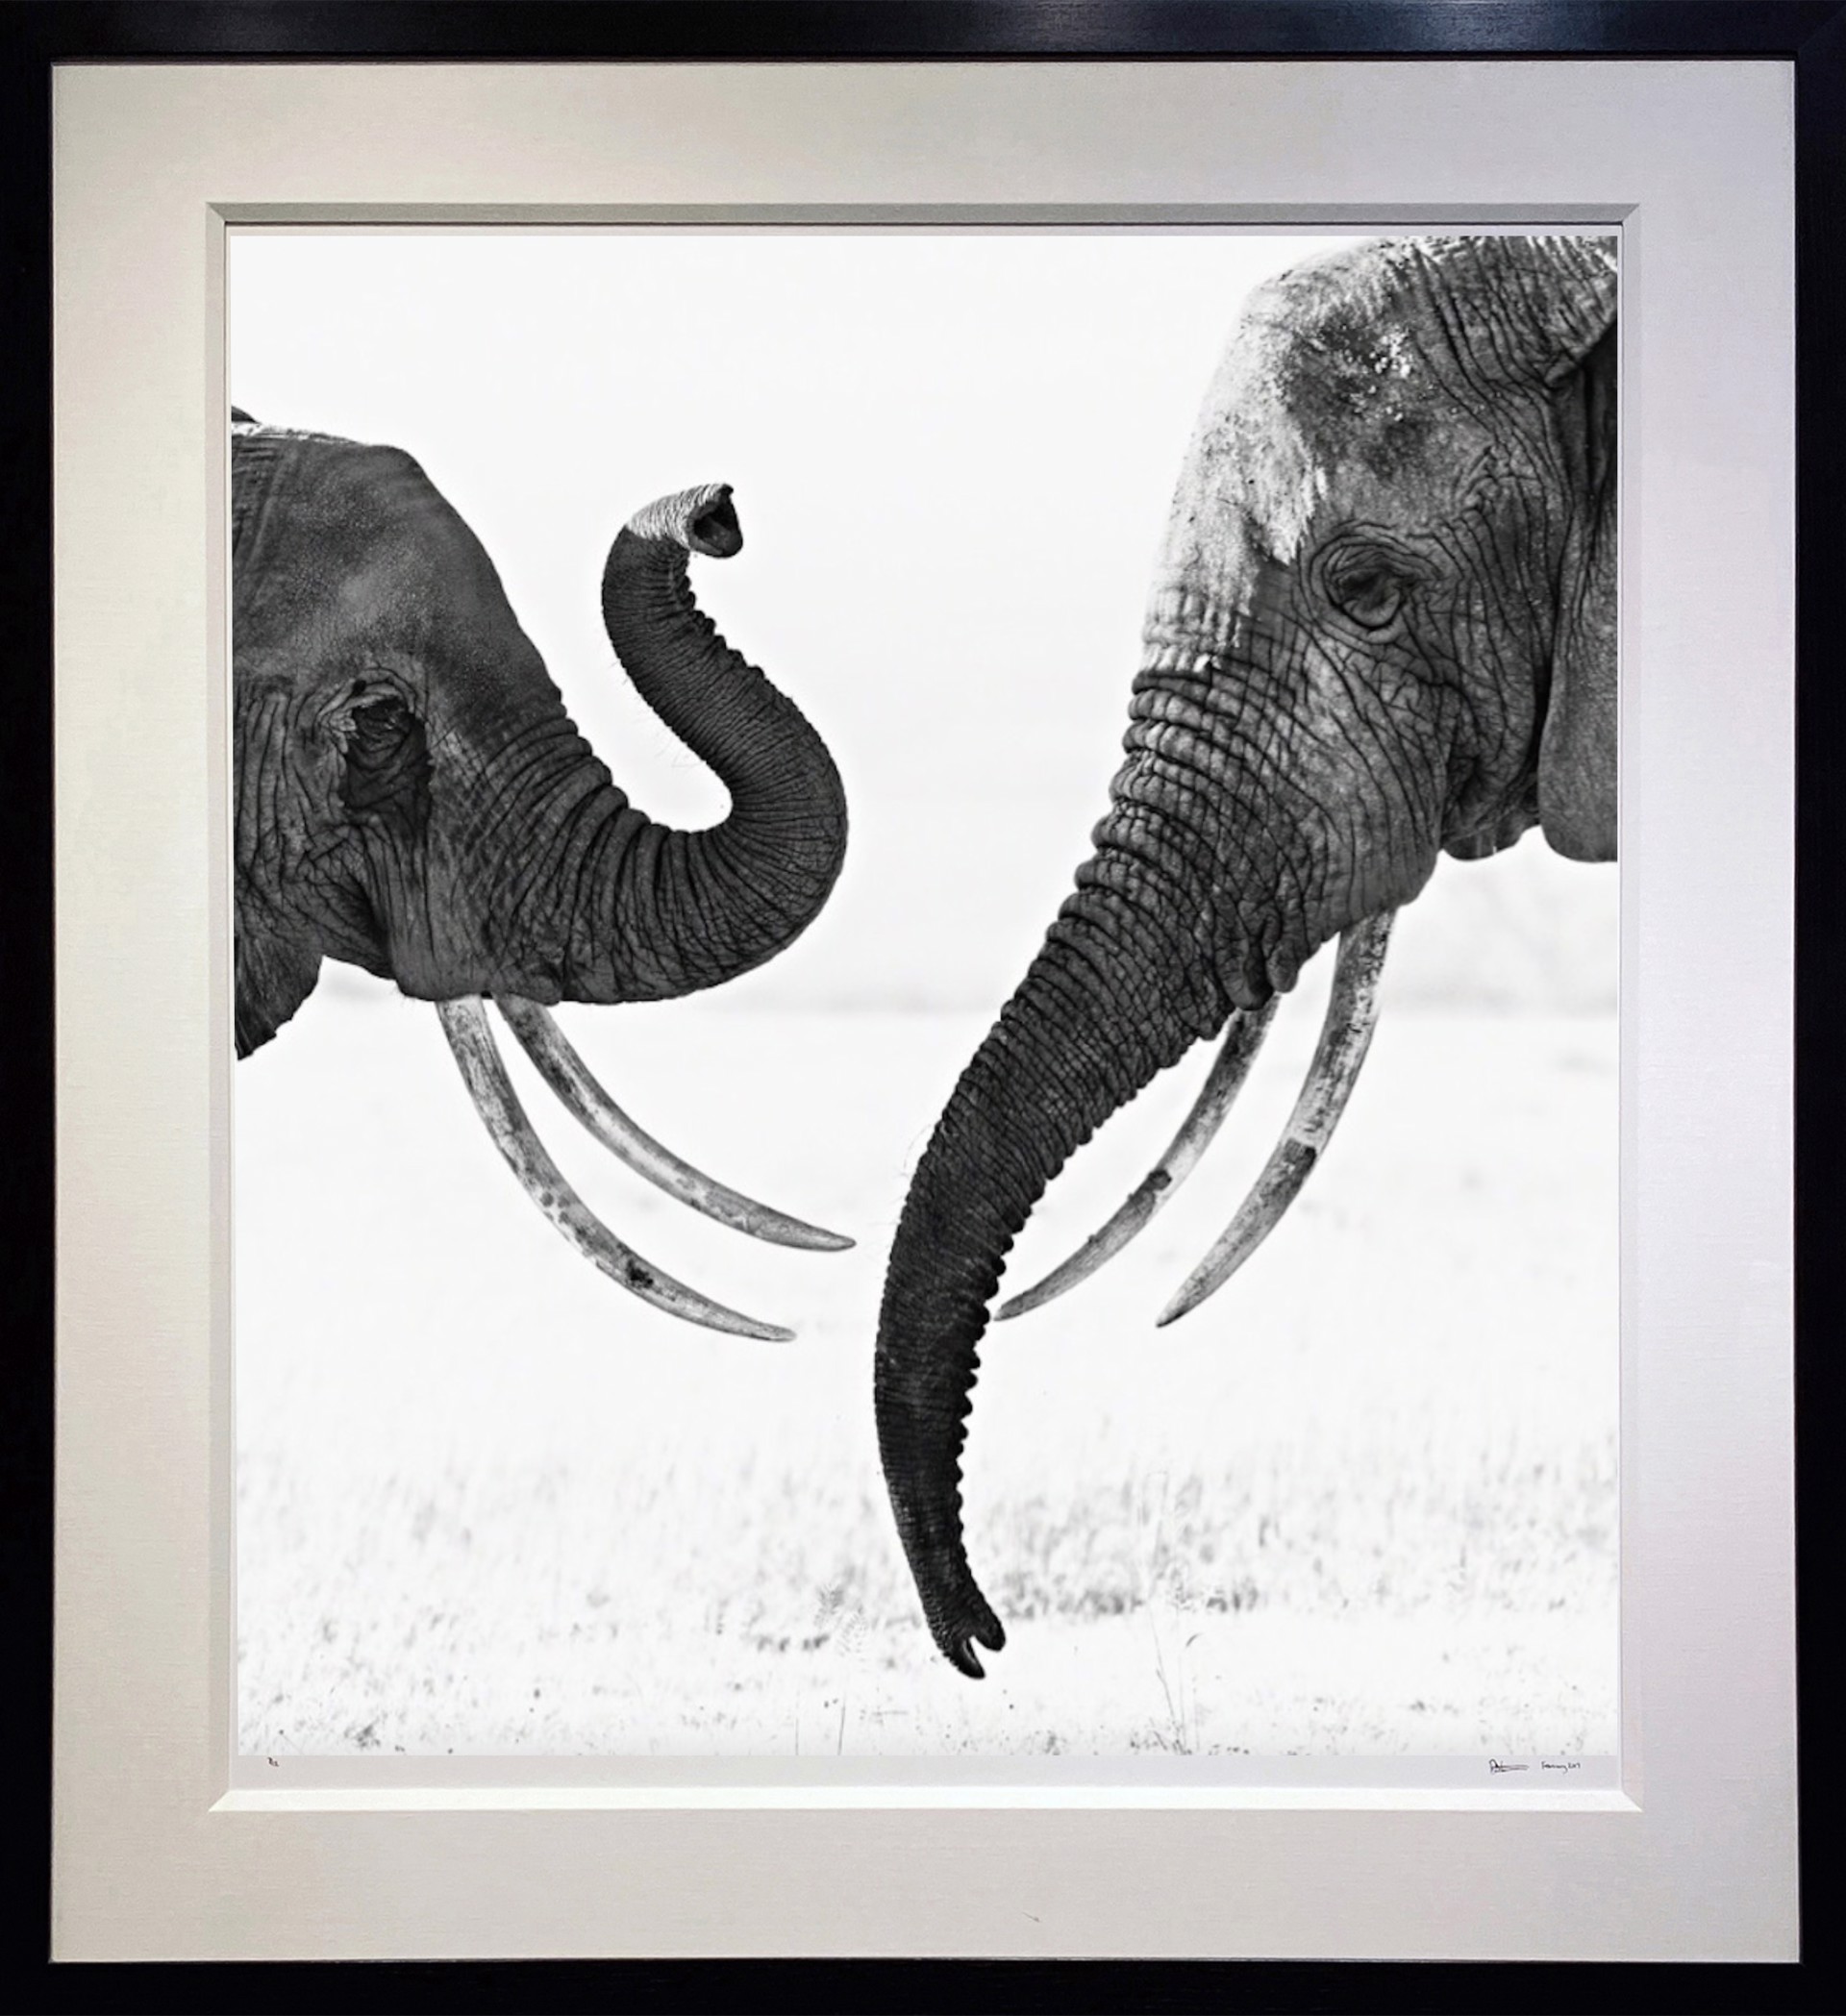 Ivory Exchange by David Yarrow